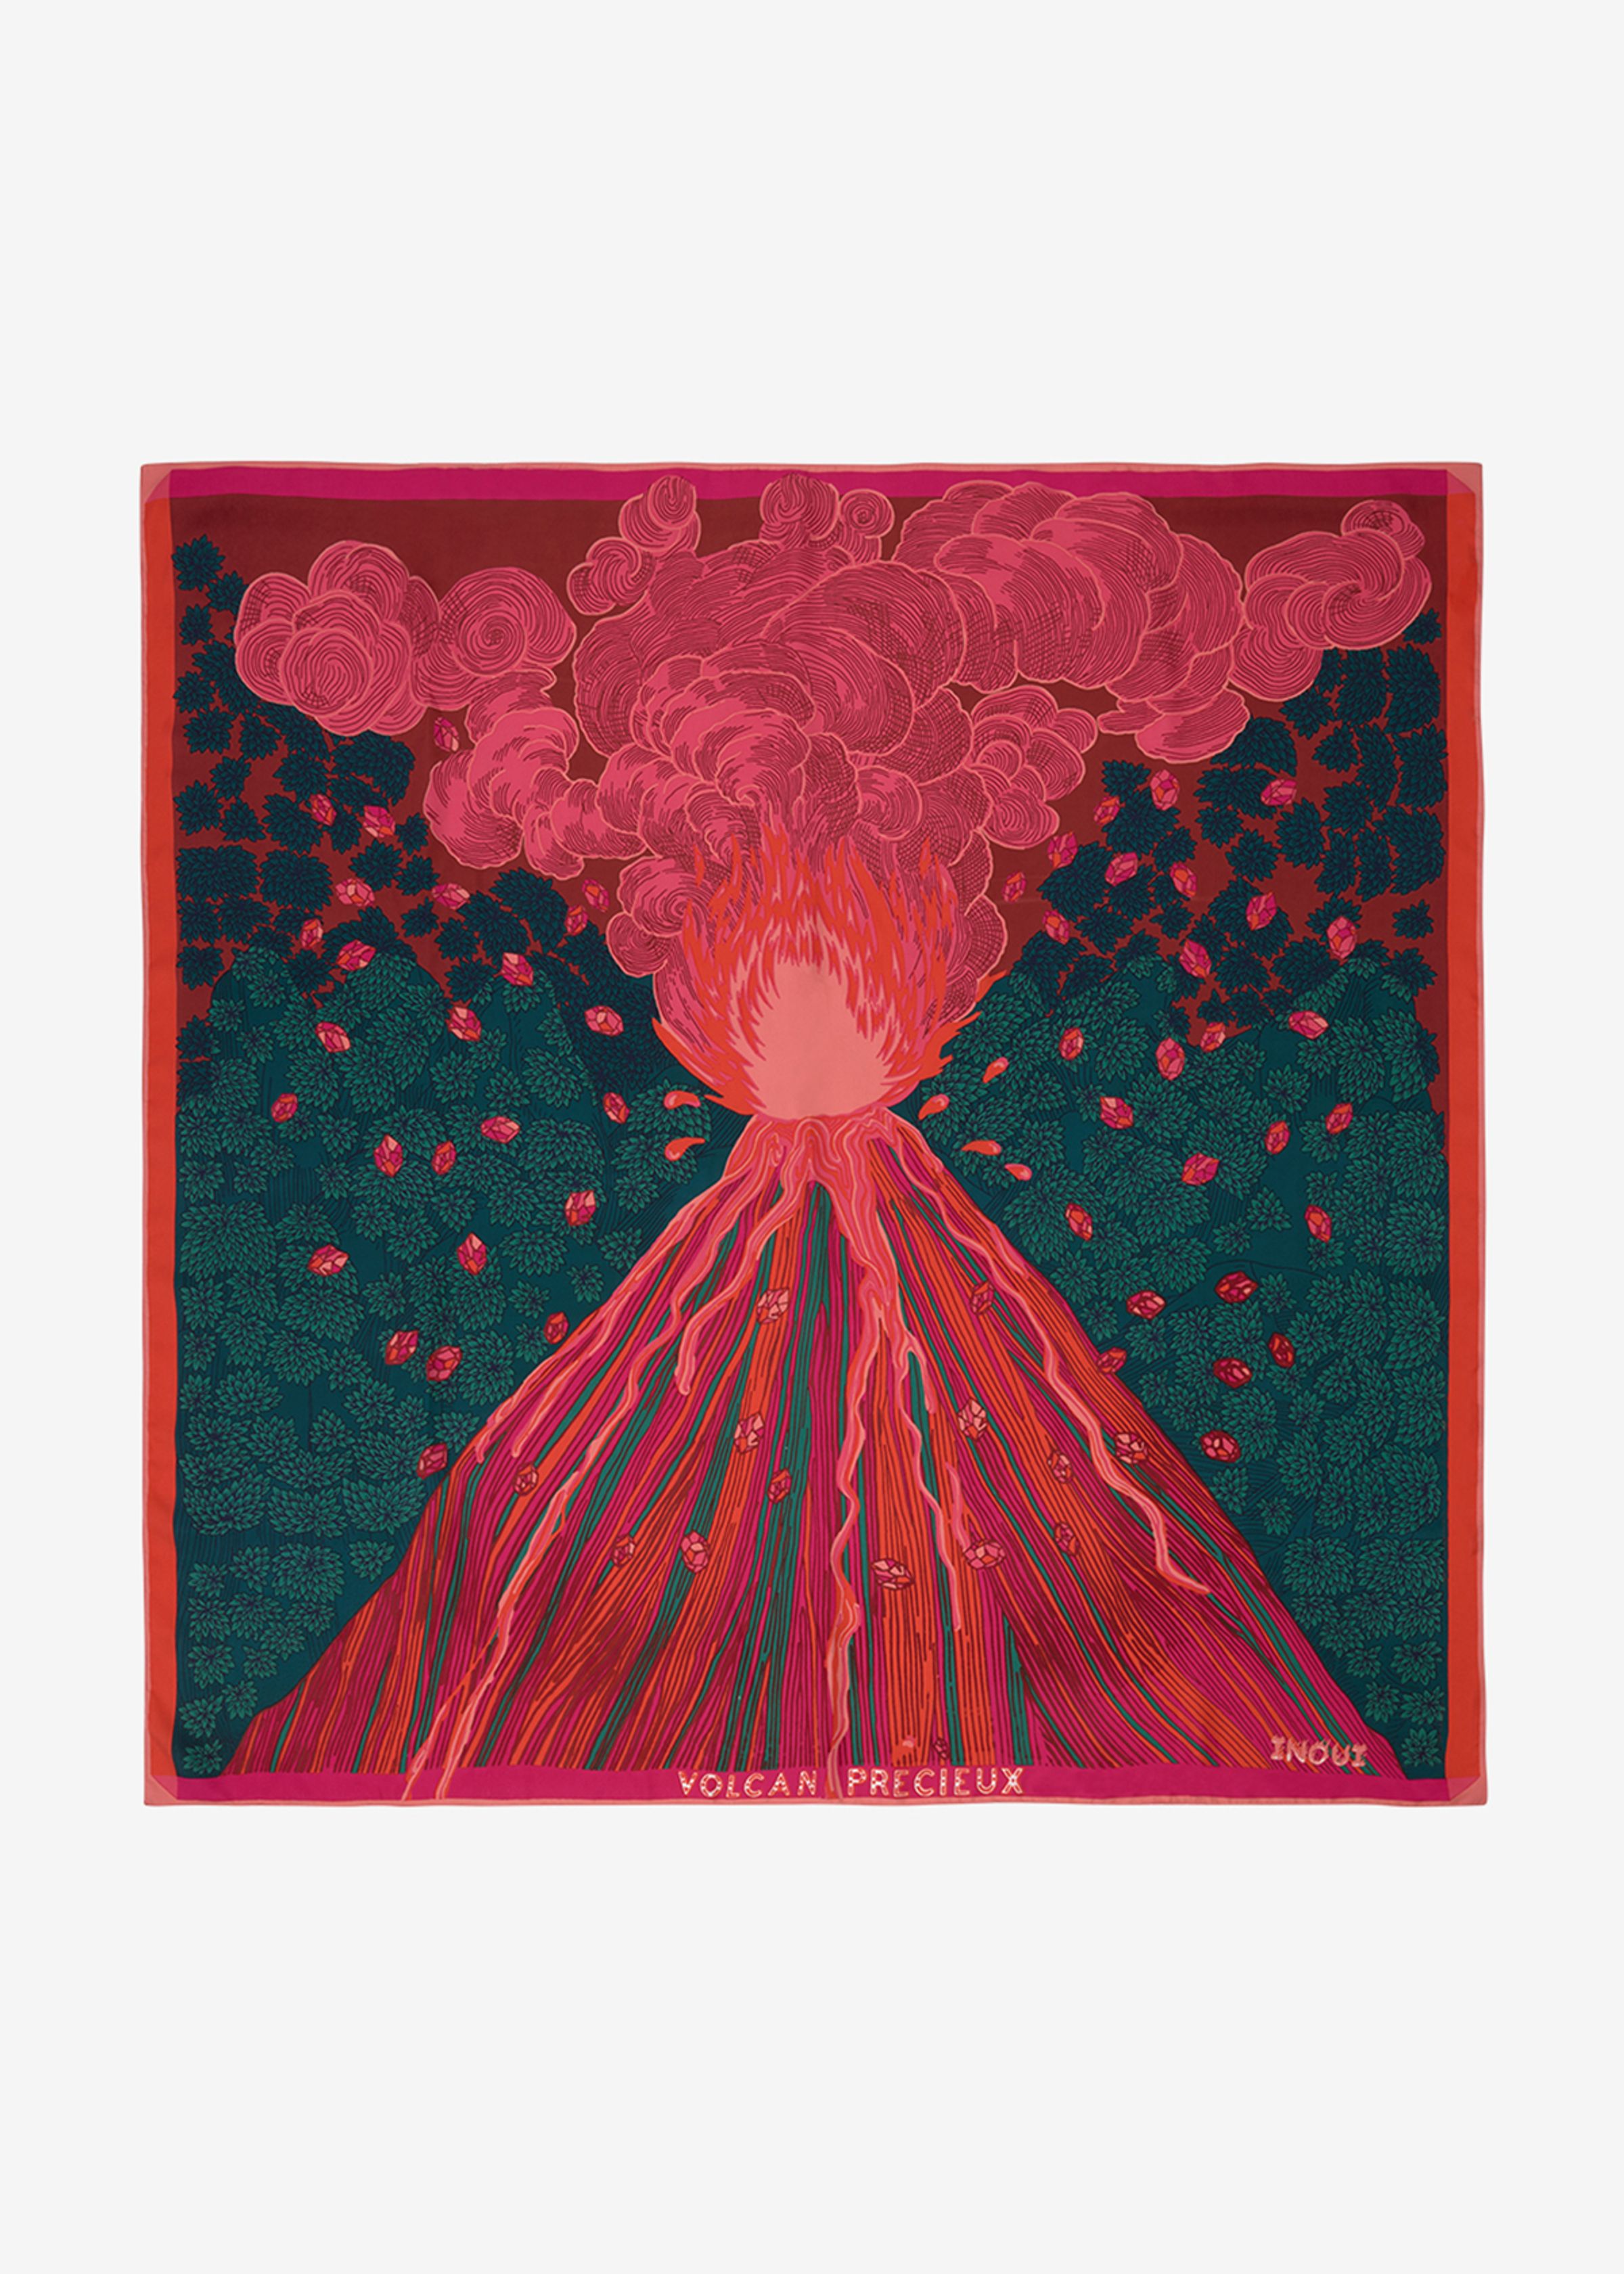 Square 100 - Stromboli - Pink